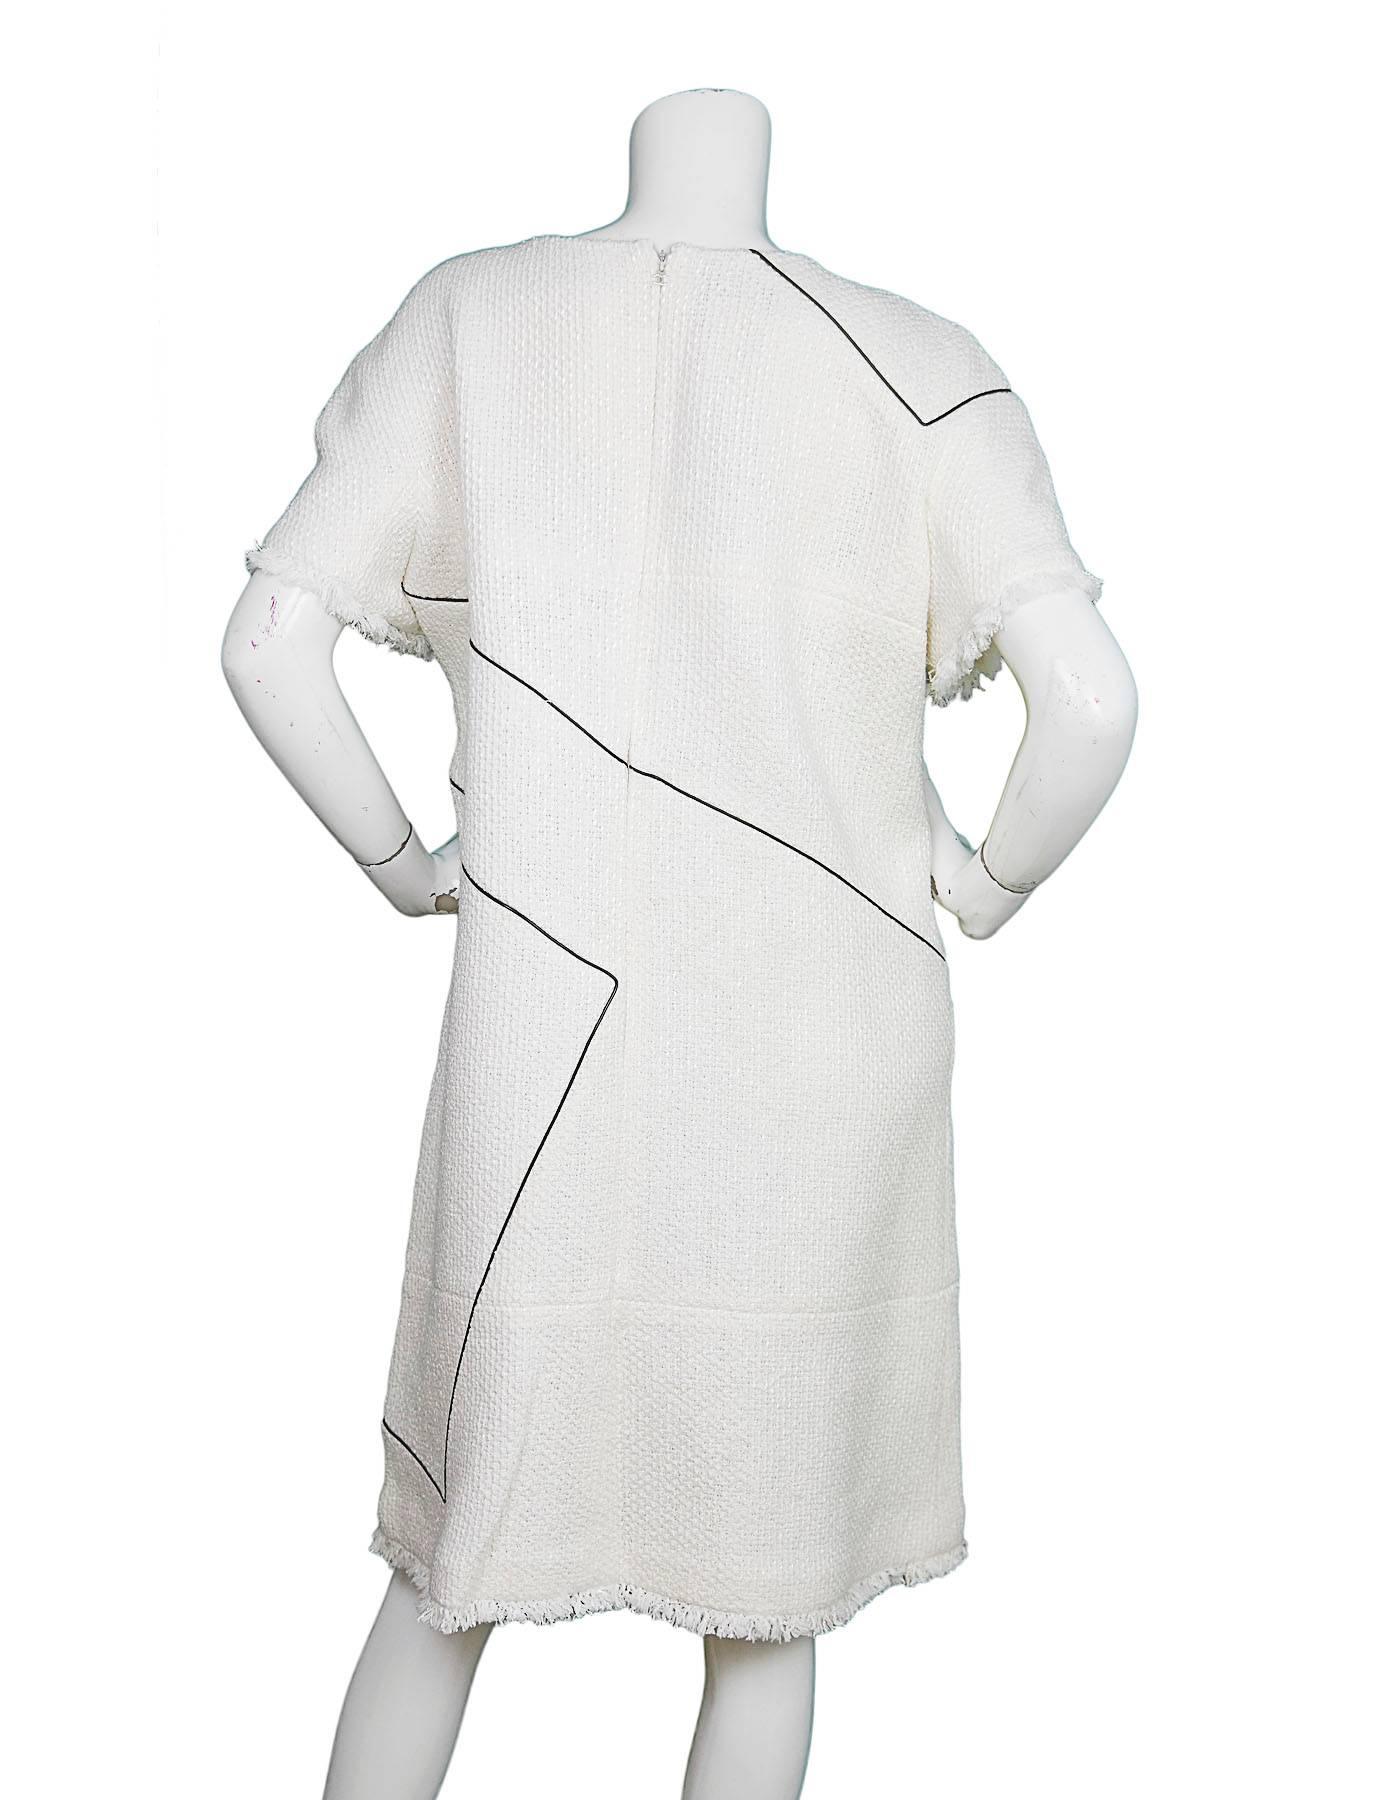 Gray Chanel Pearlized Ivory Shift Dress sz FR50